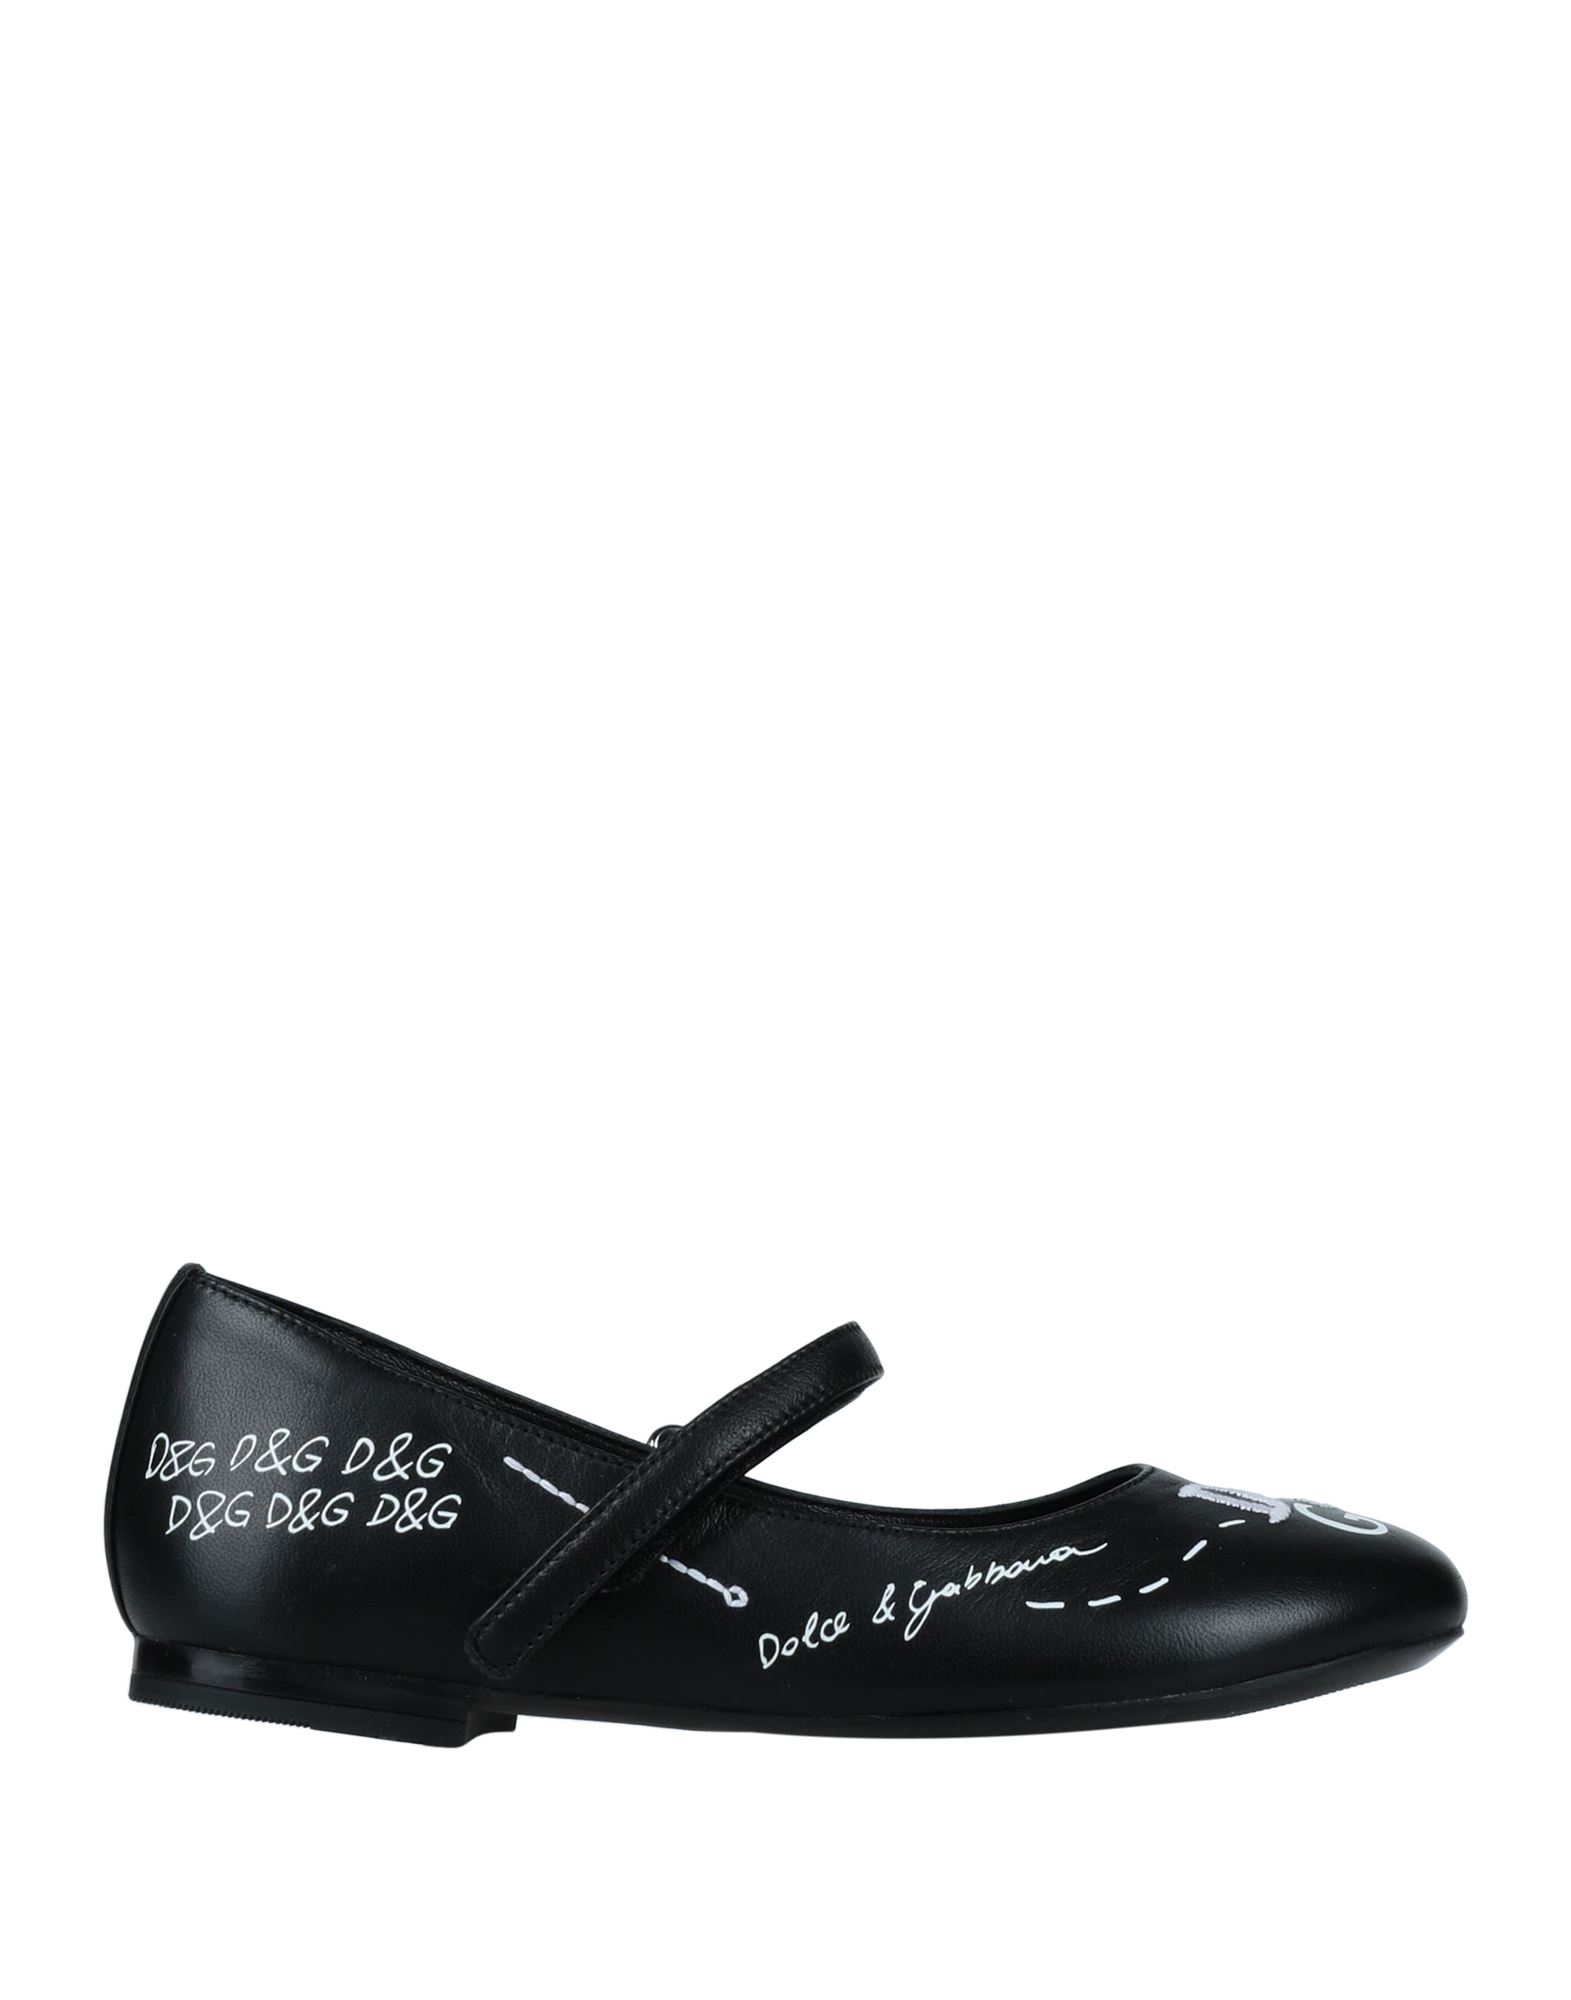 Dolce & Gabbana Kids'  Toddler Girl Ballet Flats Black Size 9c Soft Leather